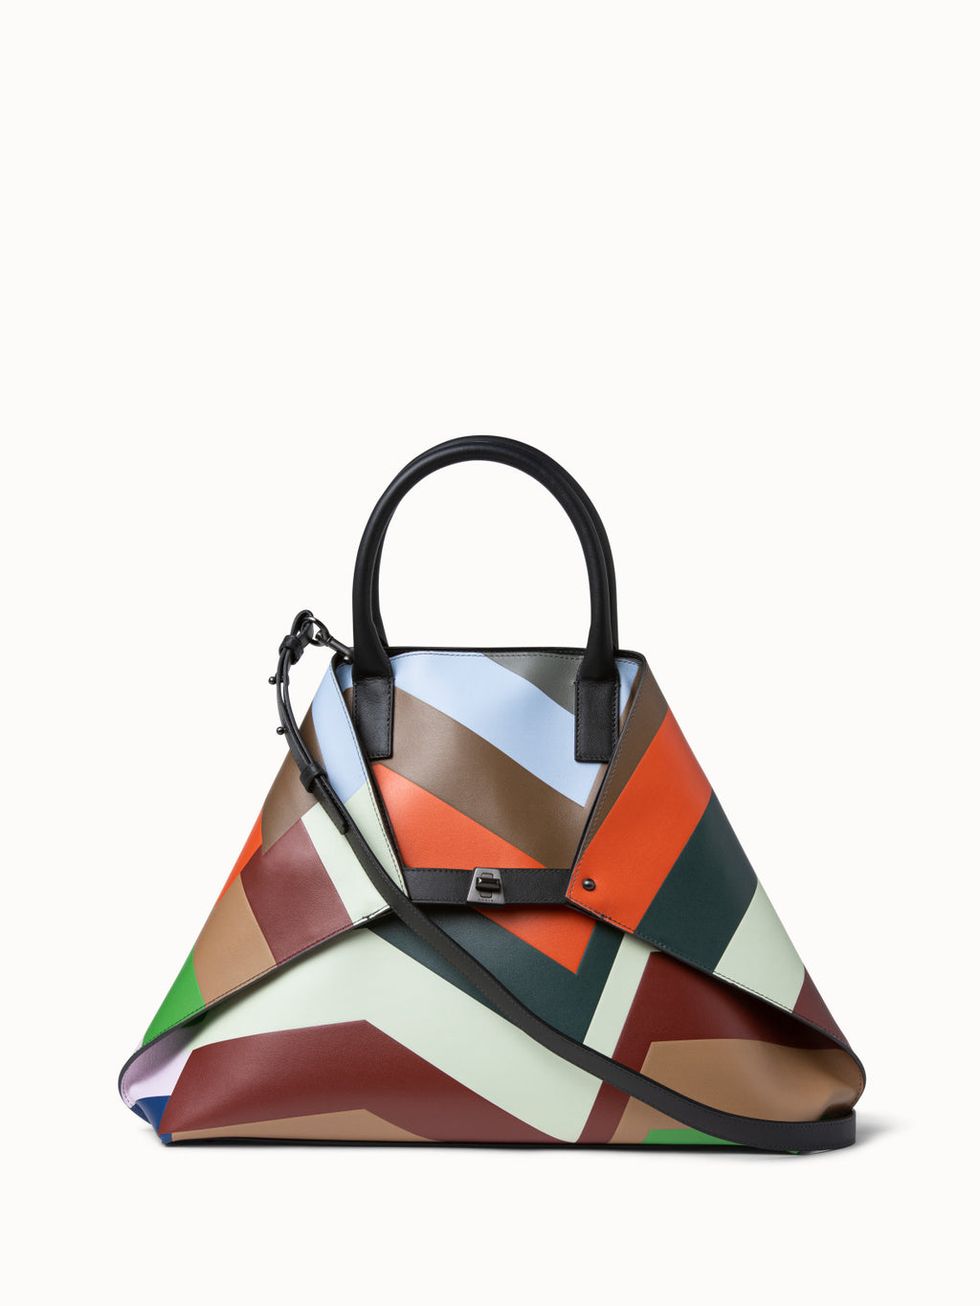 Multi Bag Fashion Week Trend - How To Layer Handbags